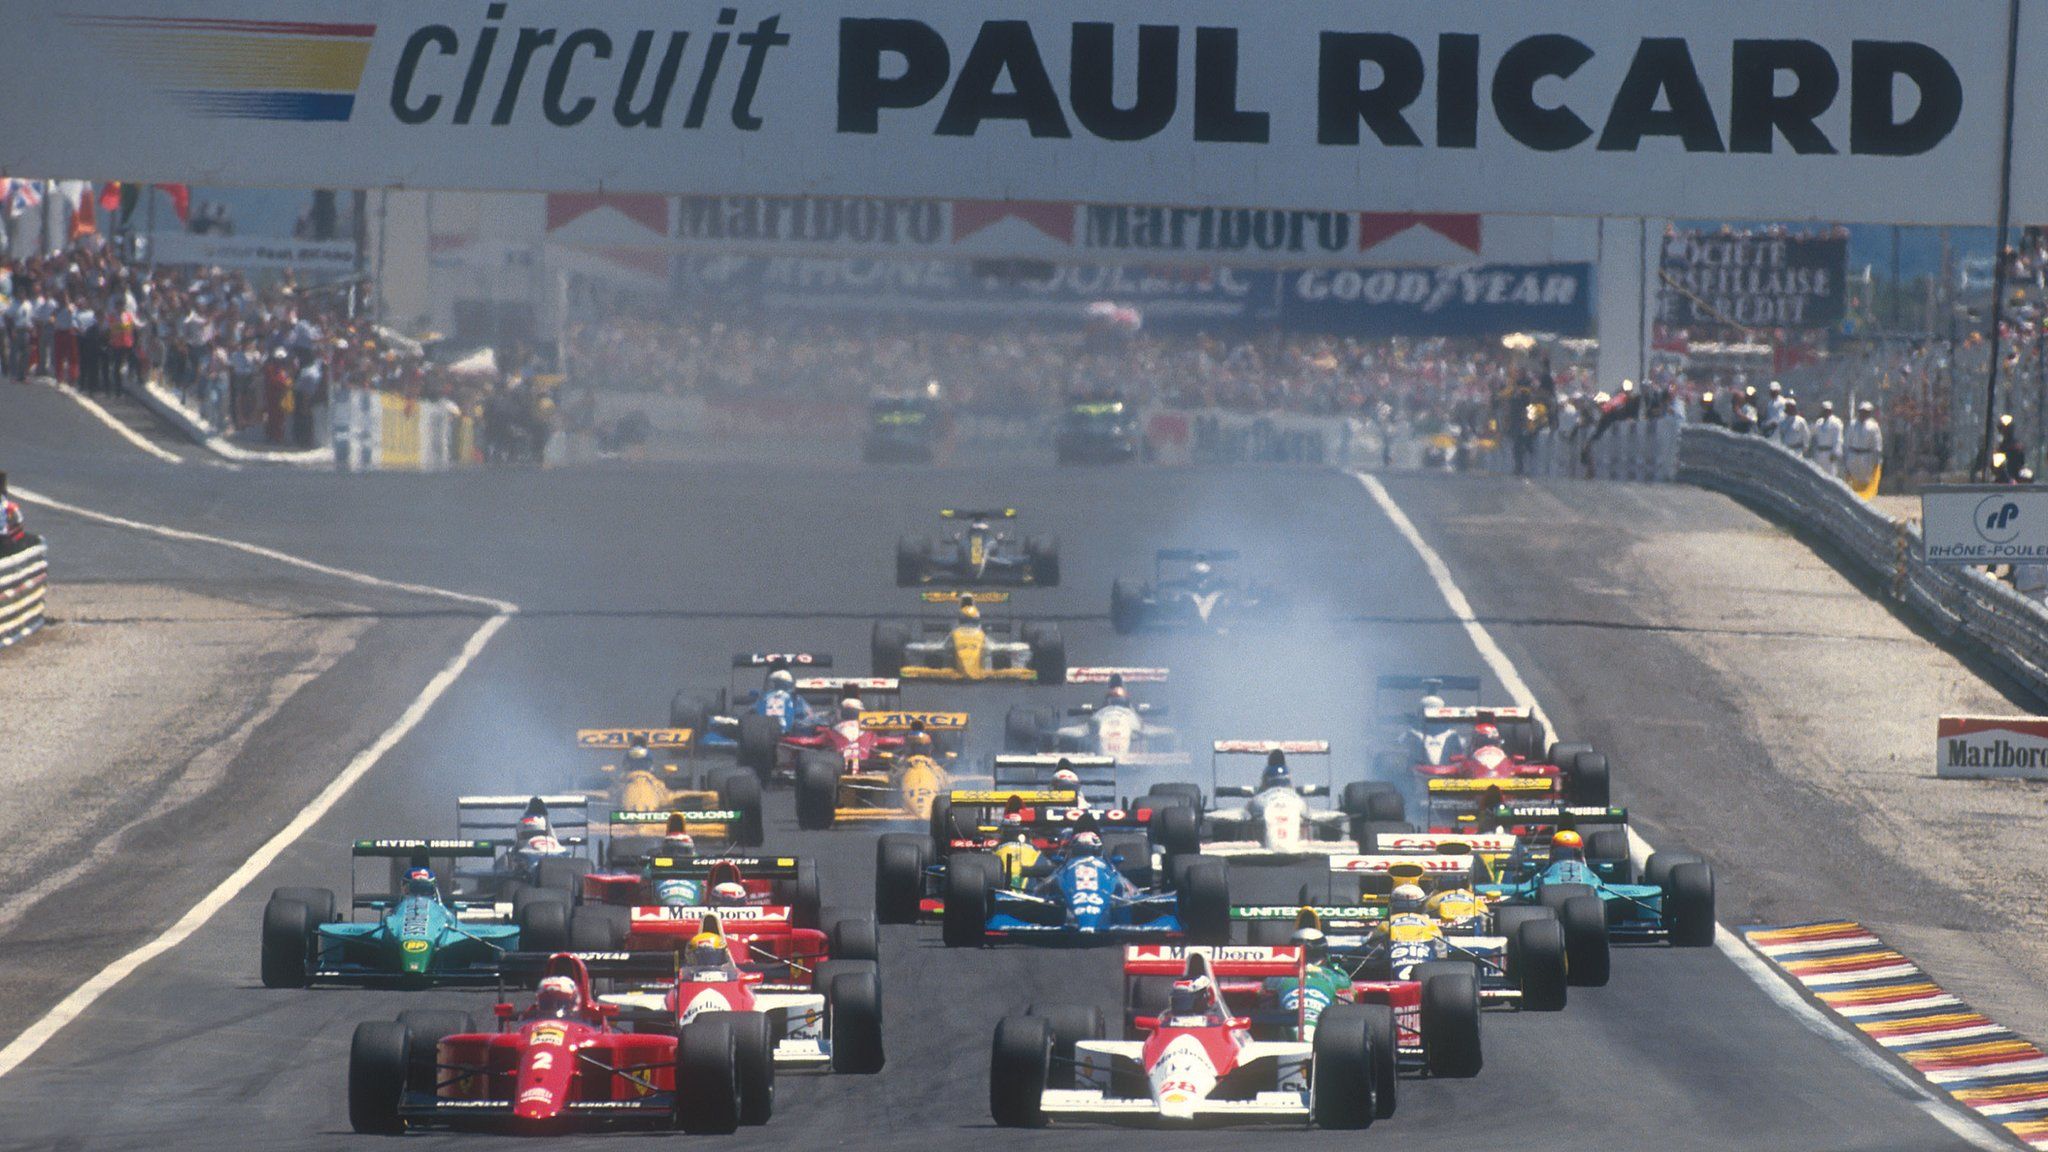 French Grand Prix in 1990